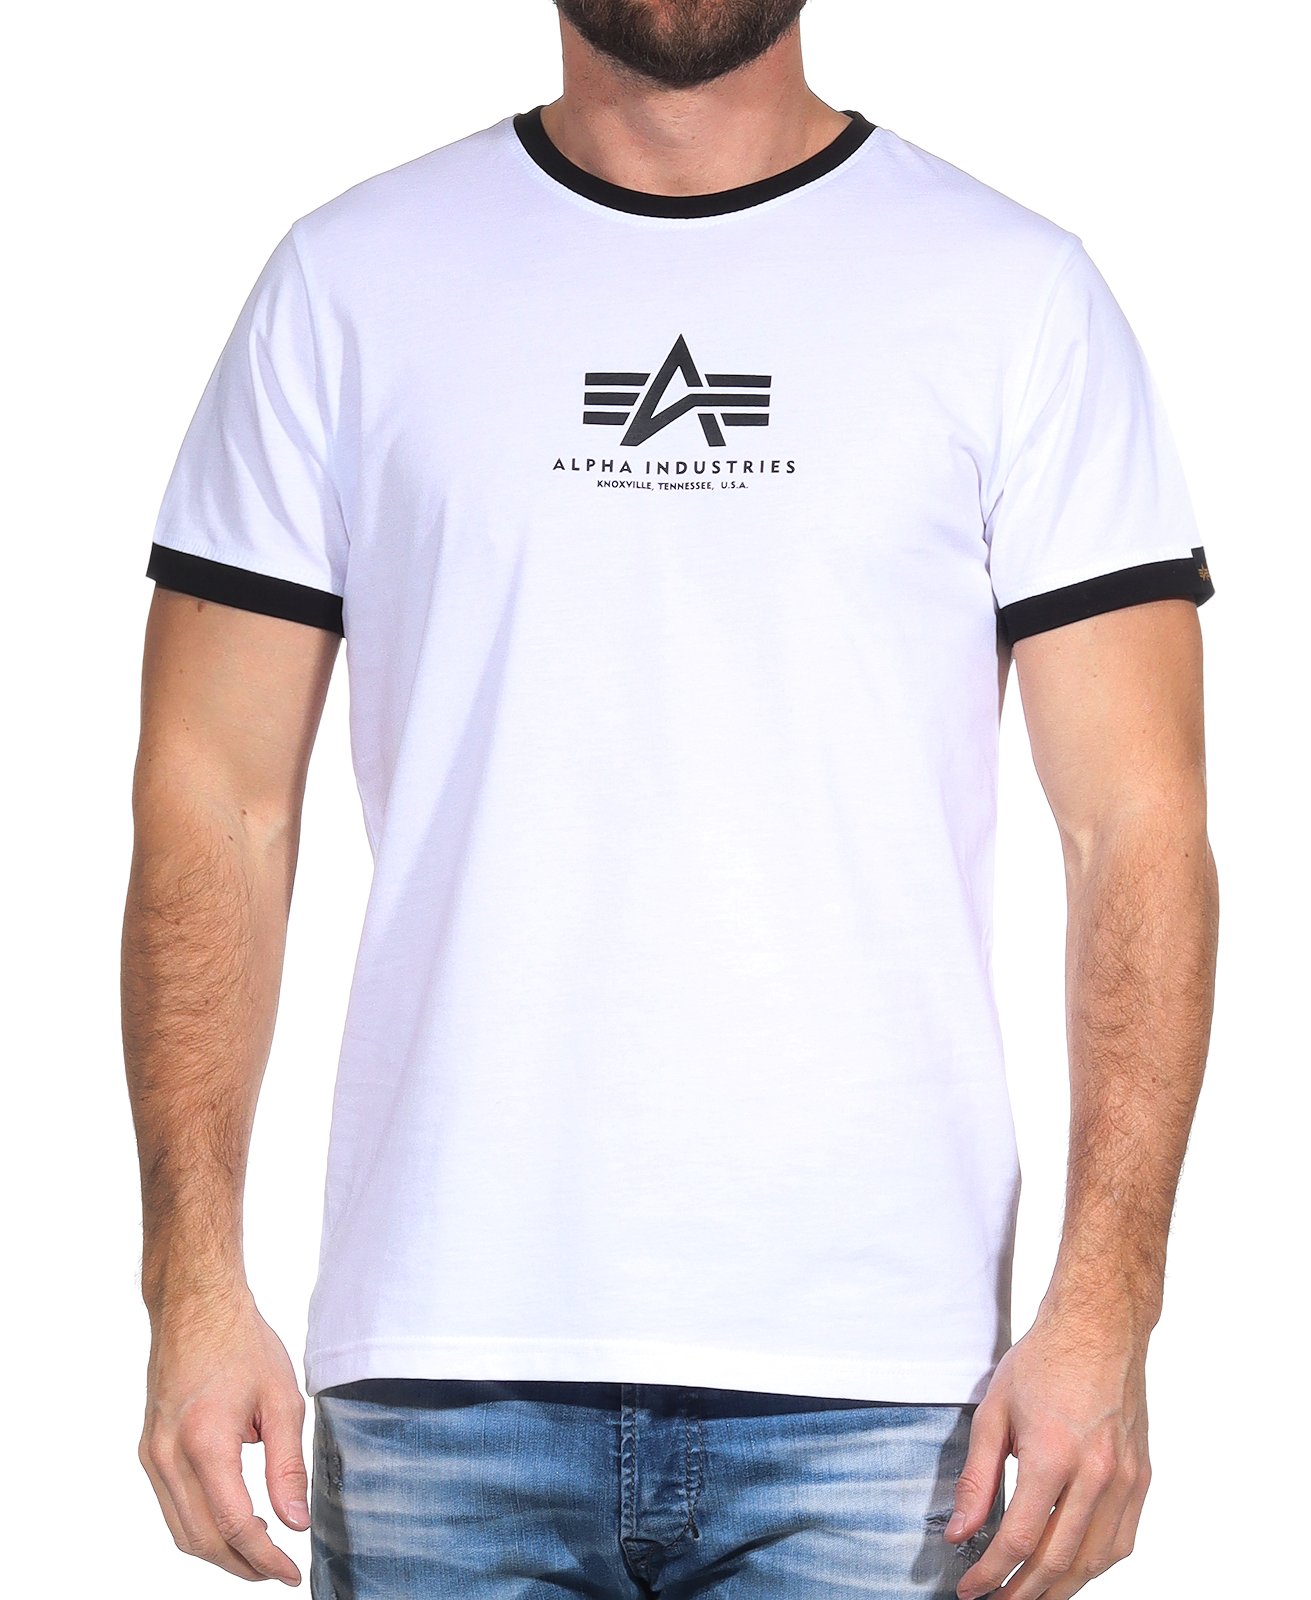 Contrast Herren Lifestyle | Alpha T-Shirts Industries T-Shirt Oberteile Basic L.E.M.B. | ML Herren Company T | 106501 |